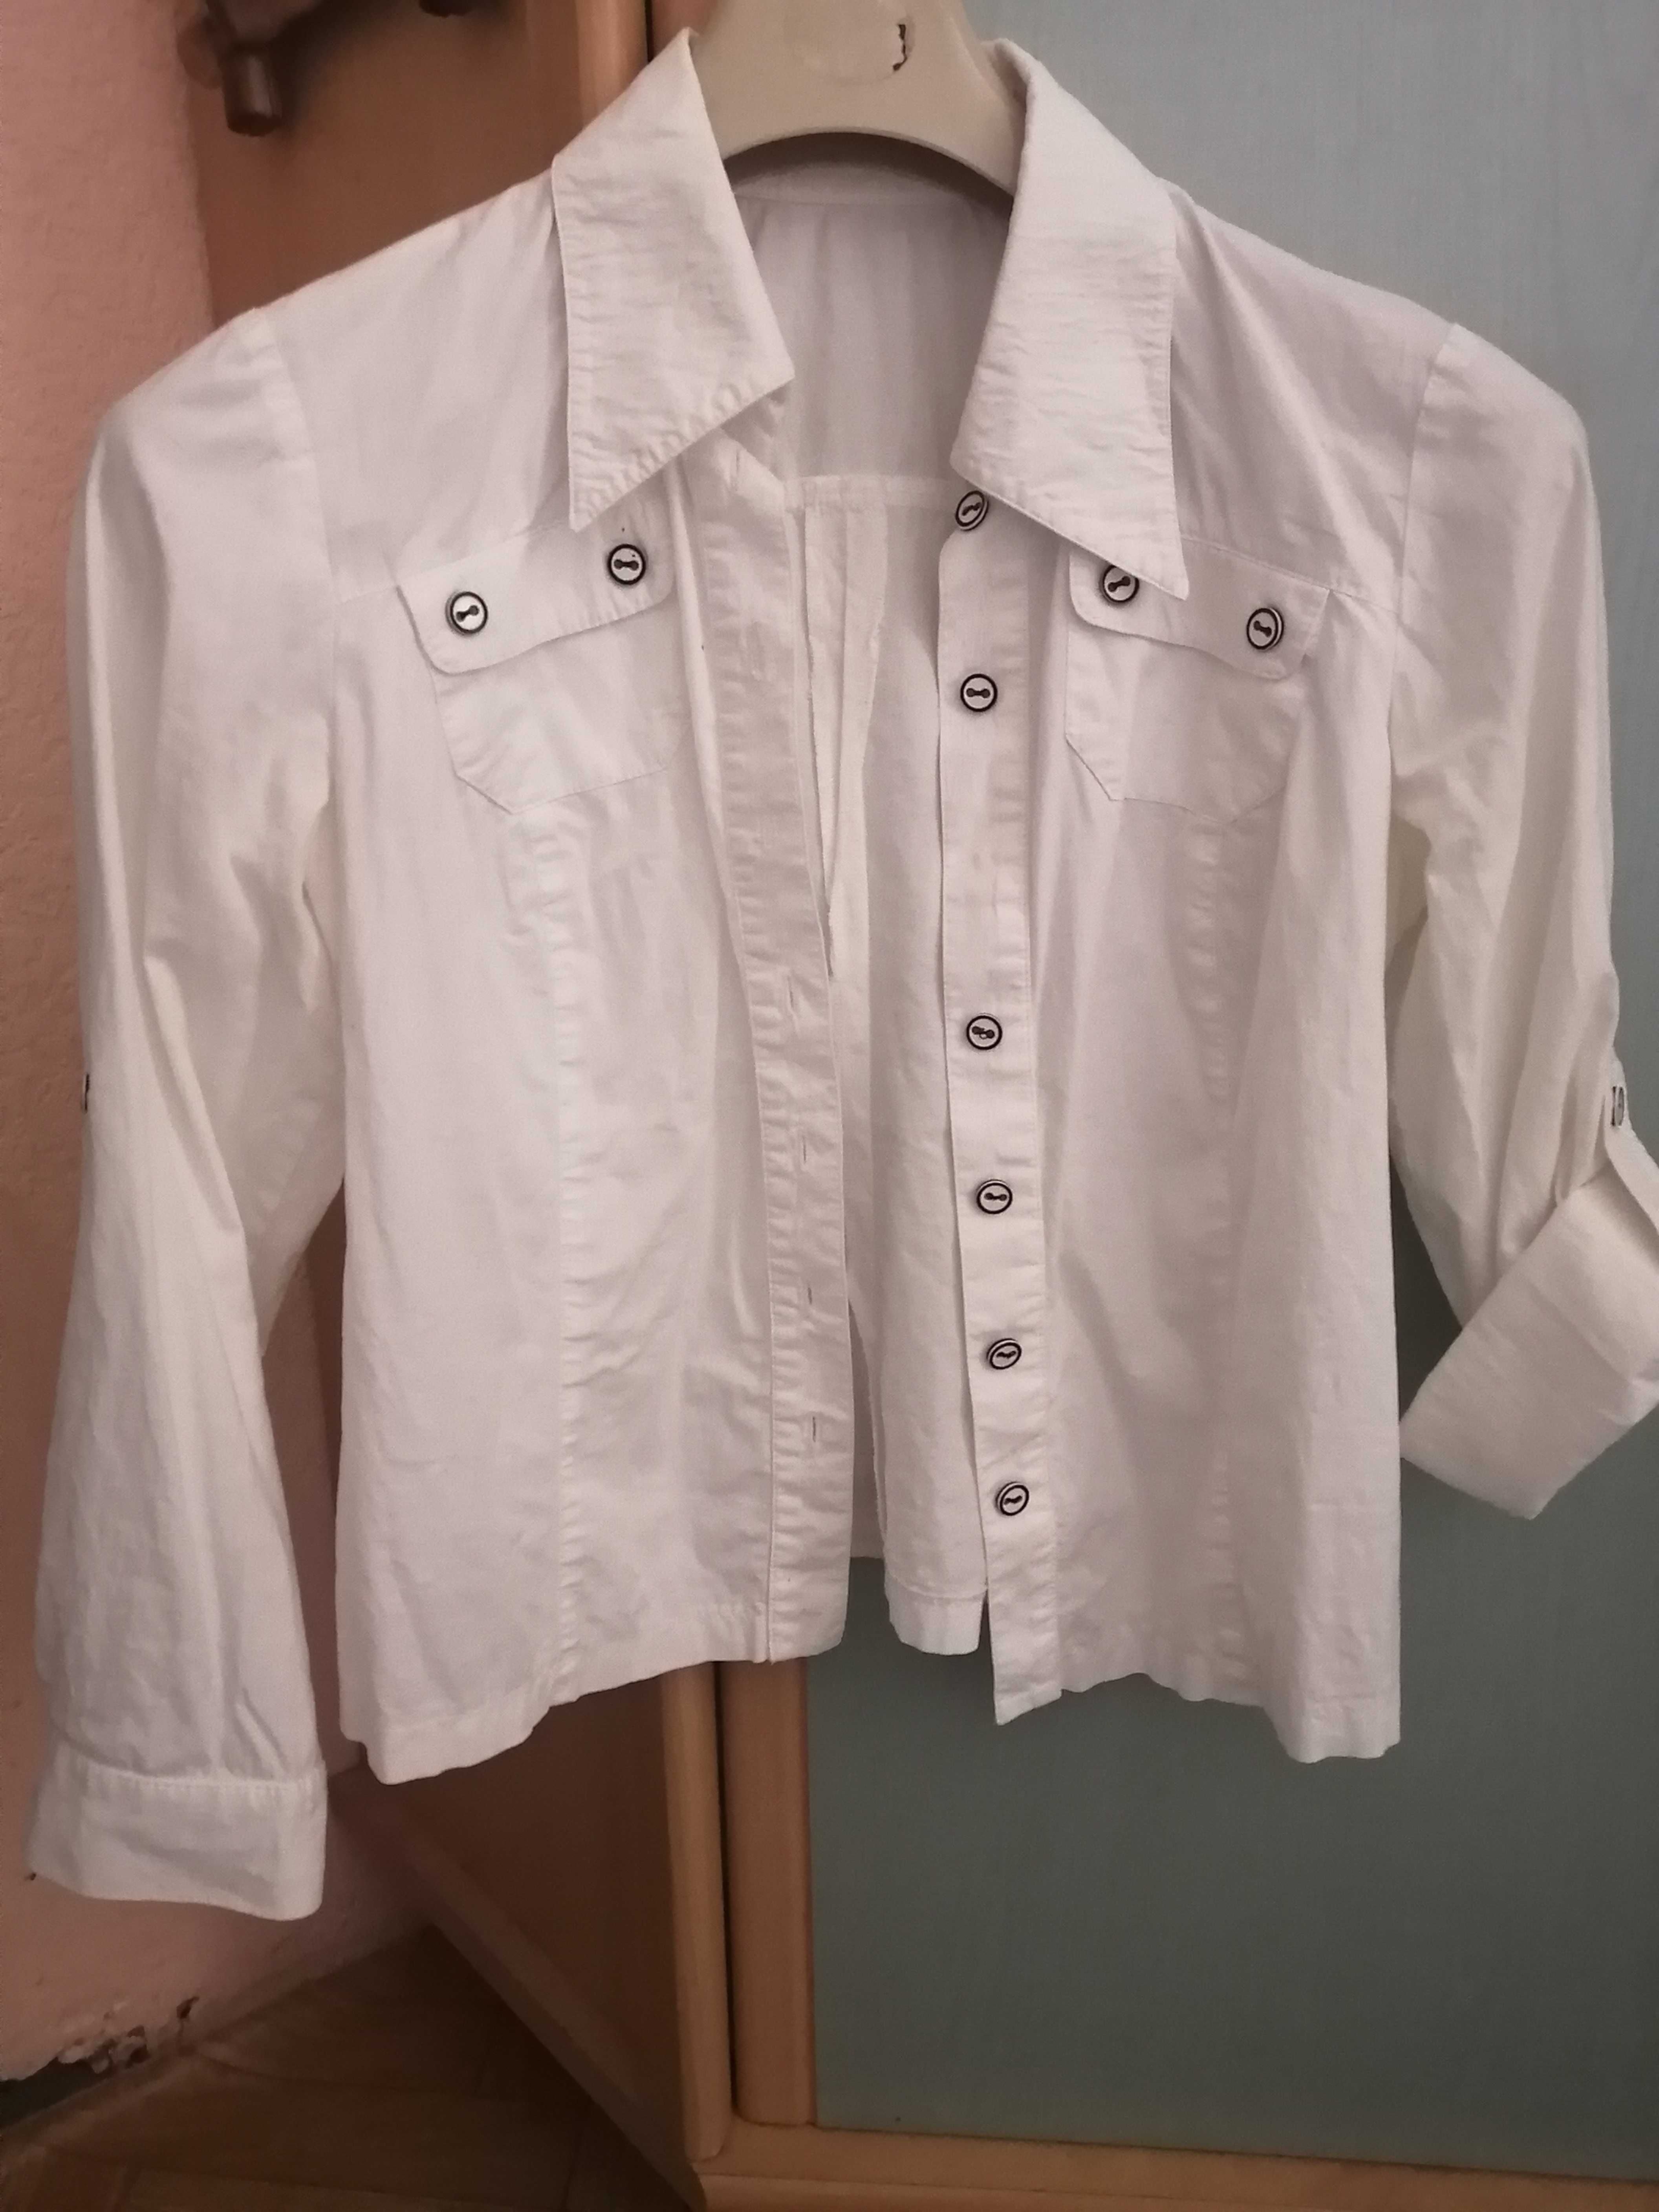 Школьные белые рубашки 1.2.3. класc  размер М,S.